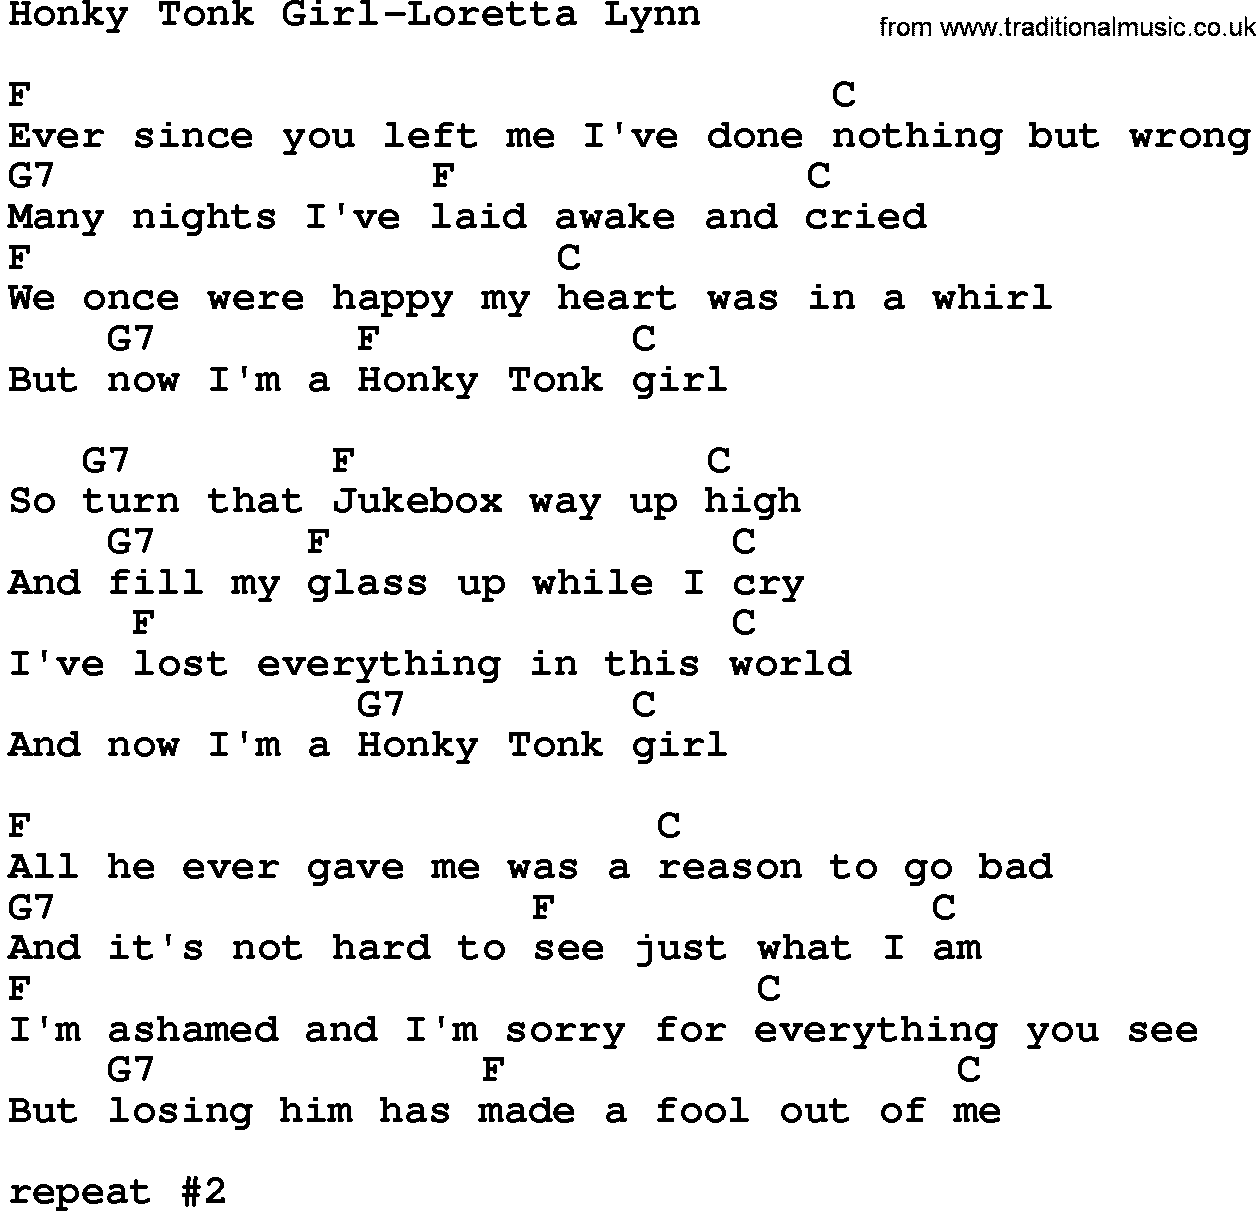 Country music song: Honky Tonk Girl-Loretta Lynn lyrics and chords